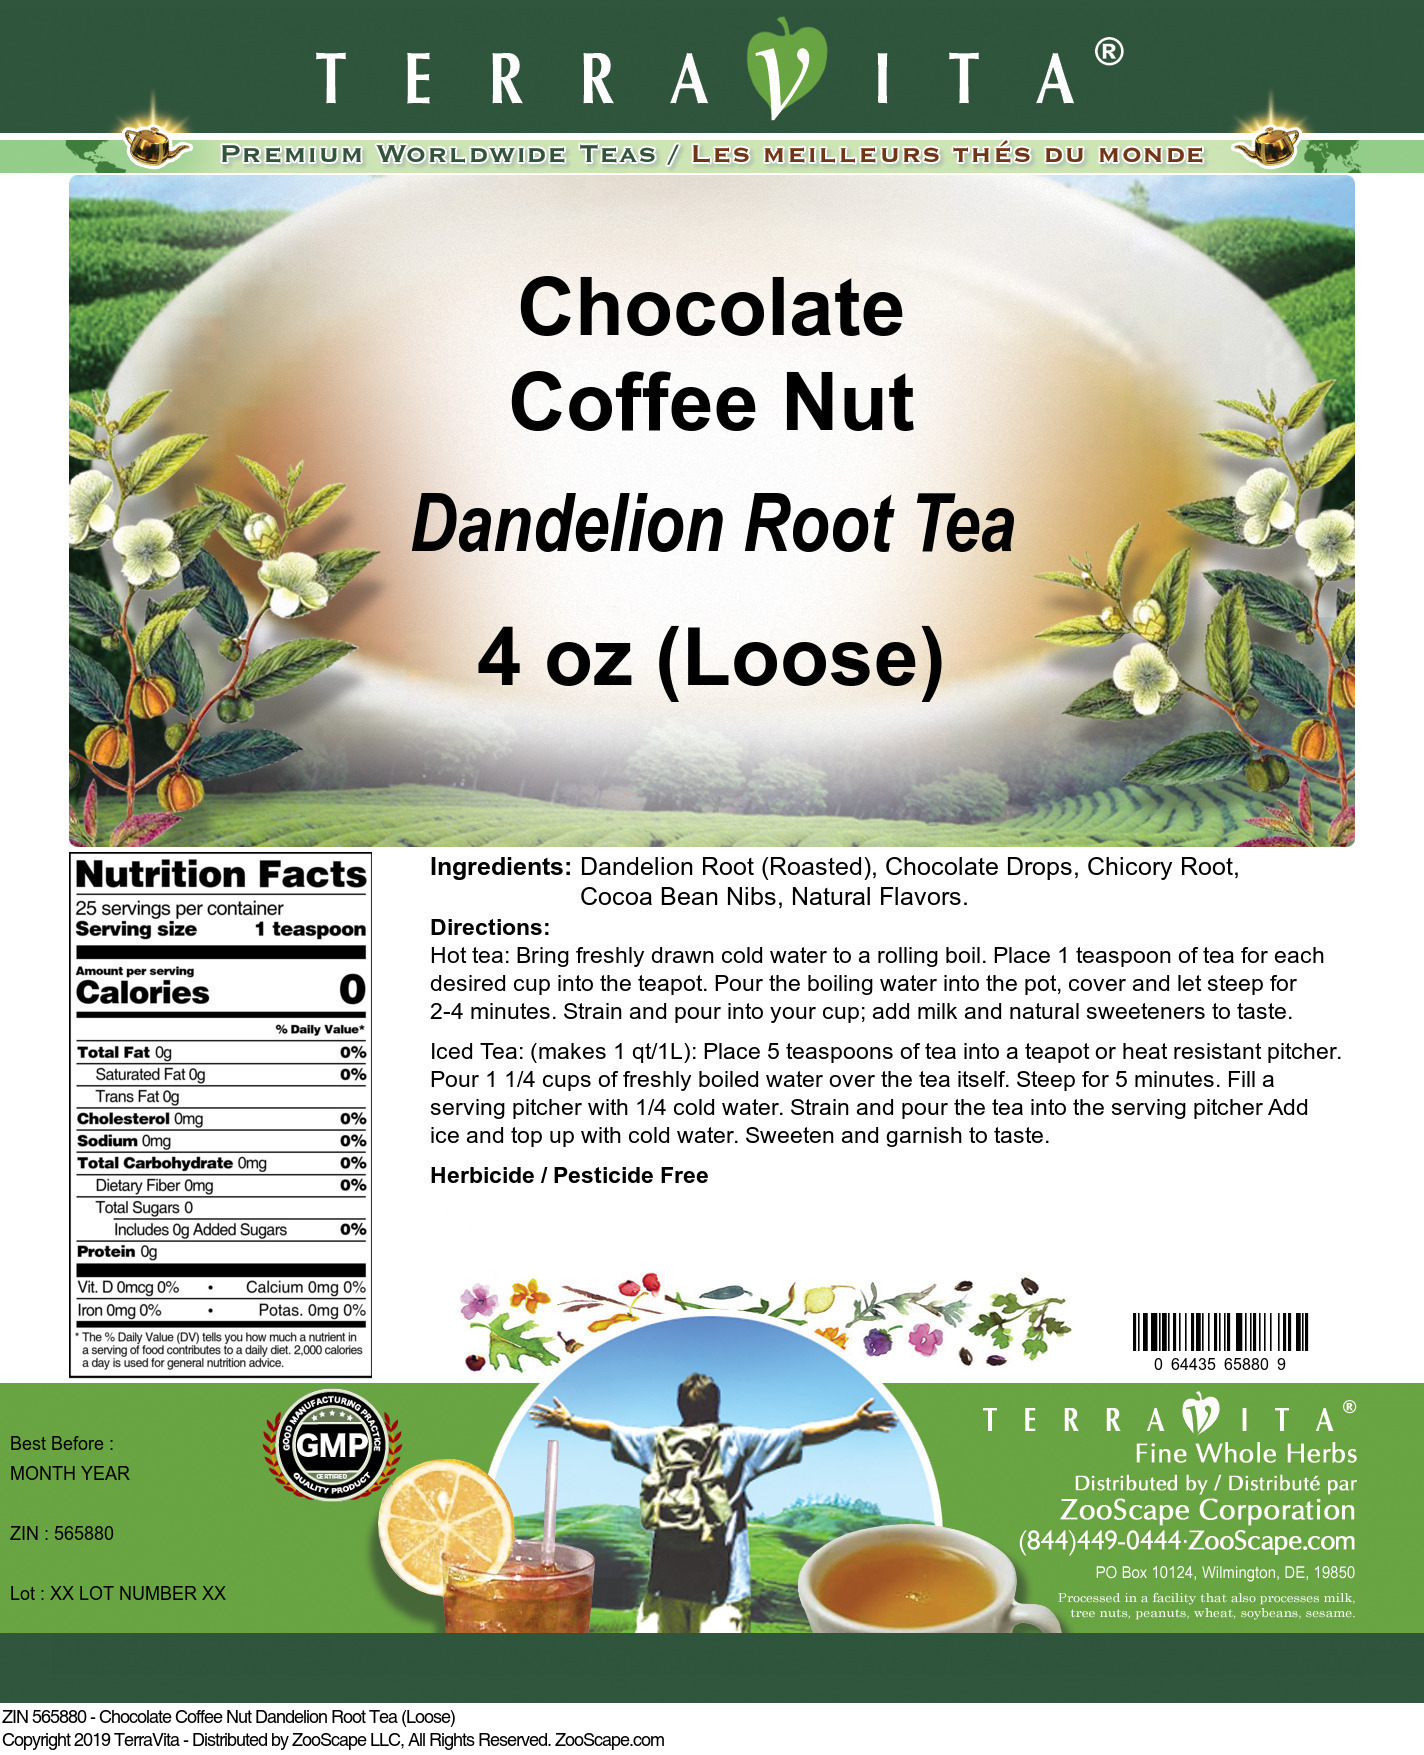 Chocolate Coffee Nut Dandelion Root Tea (Loose) - Label